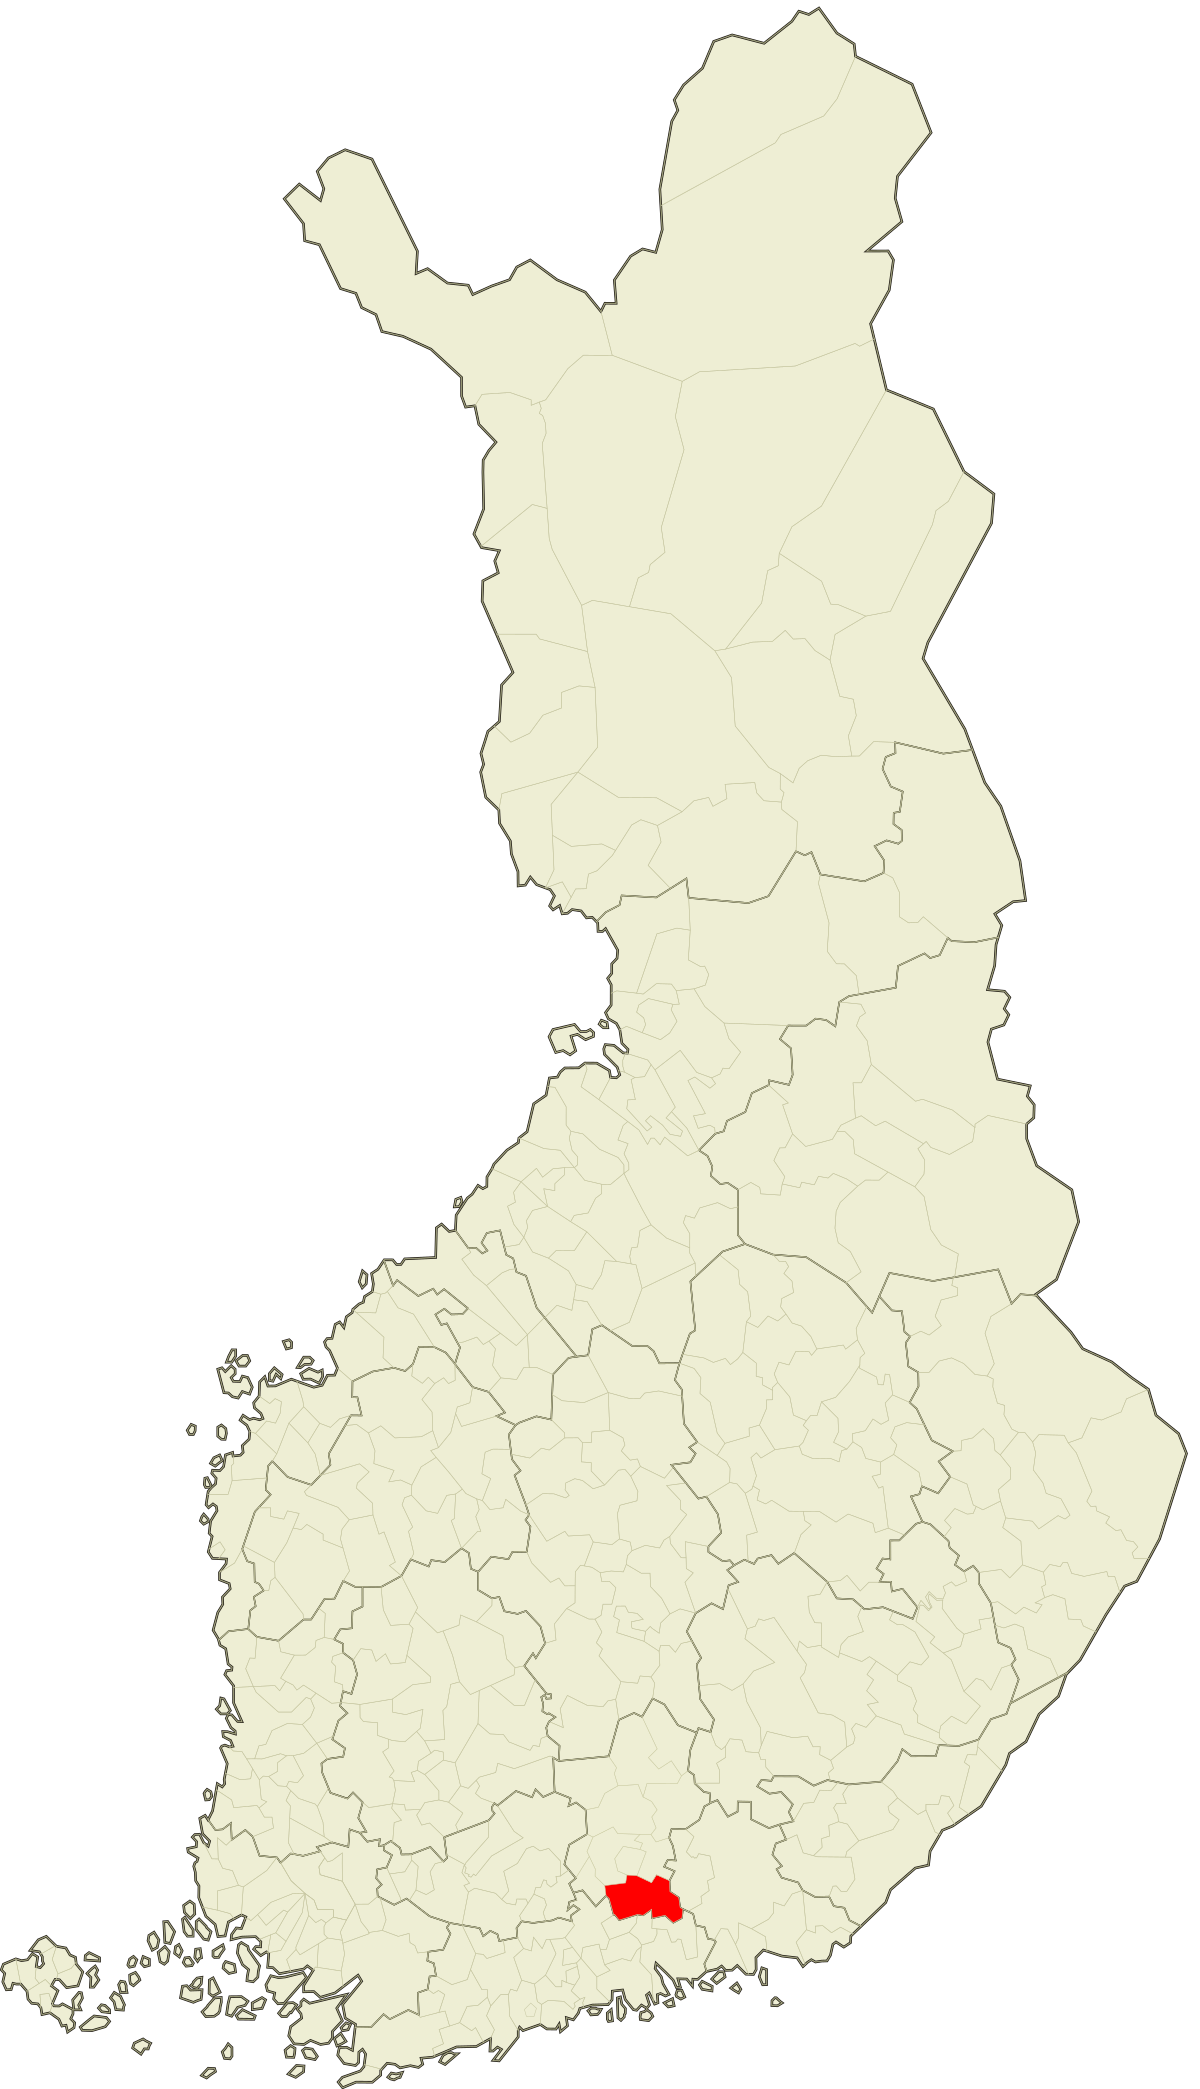 orimattila kartta File:Orimattila.sijainti.suomi.2011.svg   Wikipedia